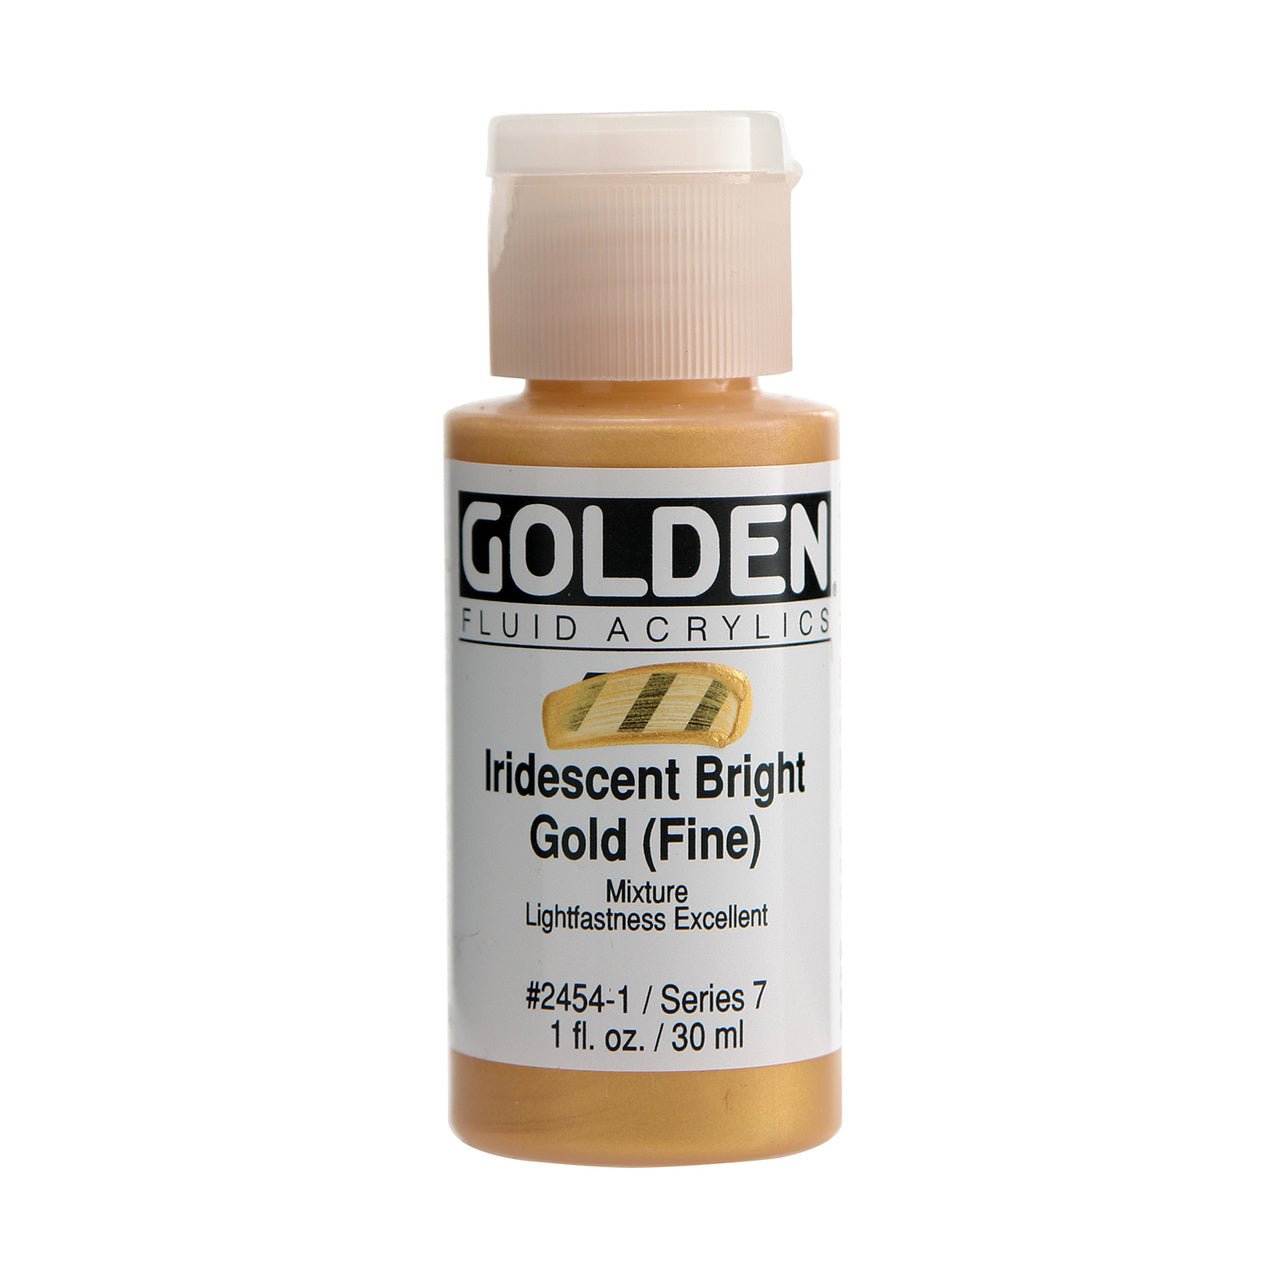 Golden Fluid Acrylic Iridescent Bright Gold (fine) 1 oz - merriartist.com